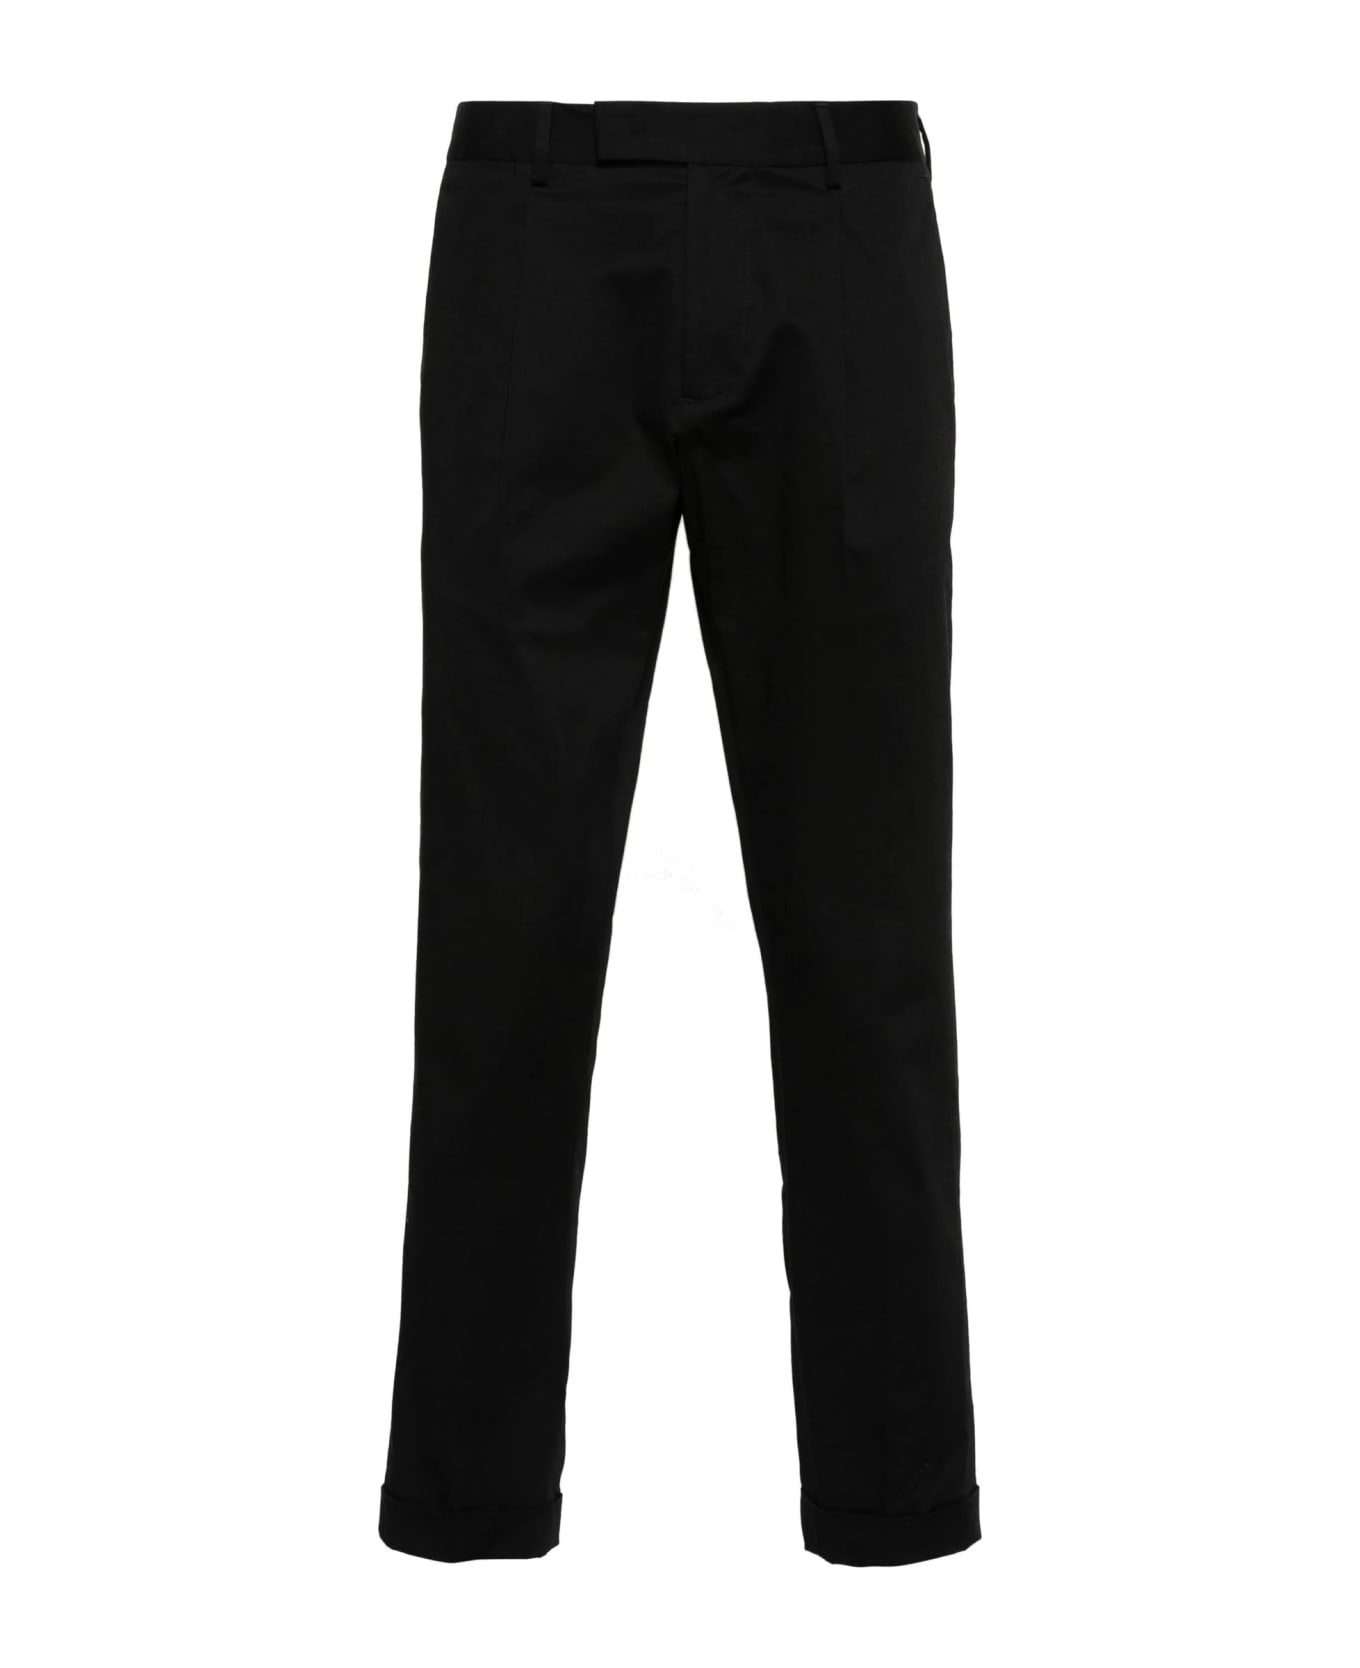 Low Brand Trousers Black - Black